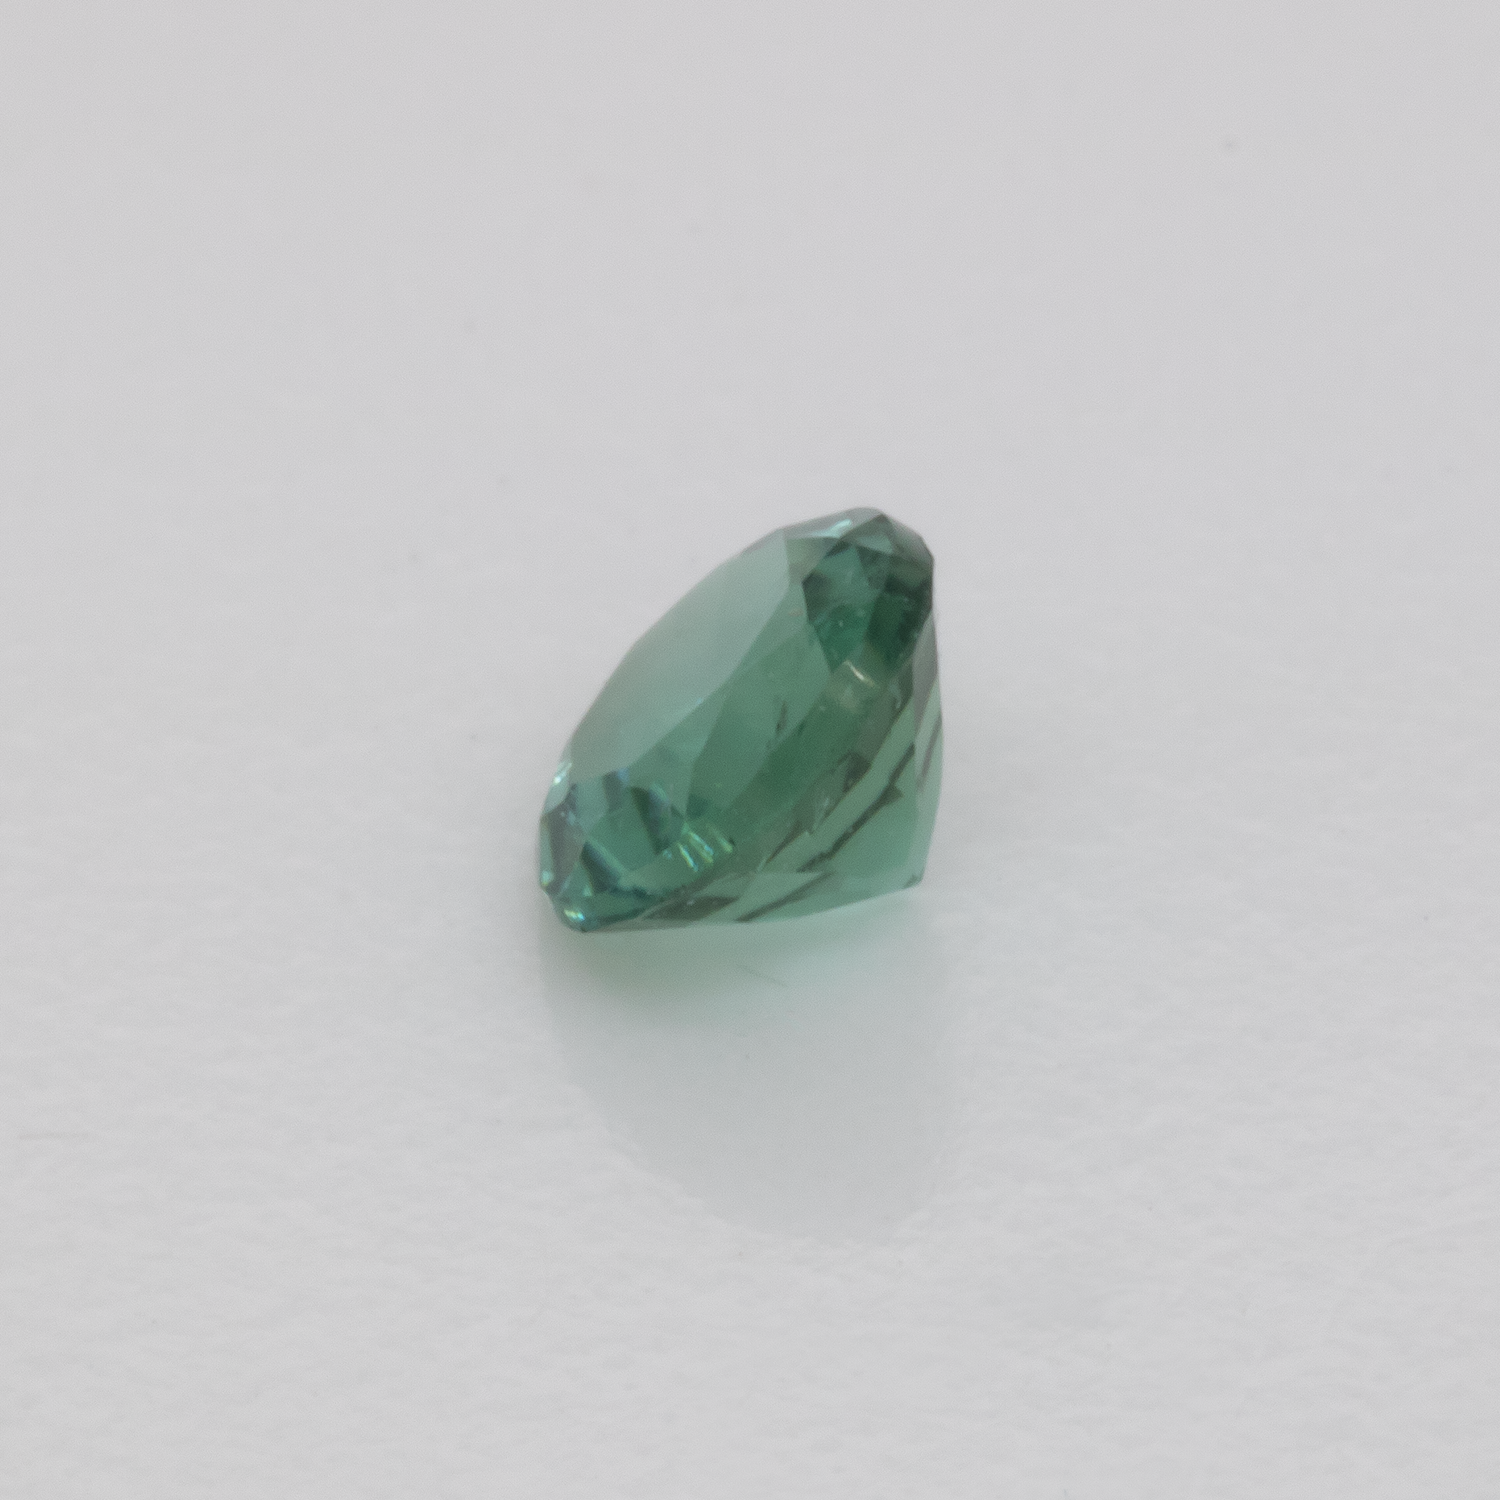 Tourmaline - green, round, 3.6x3.6 mm, 0.16-0.18 cts, No. TR991052